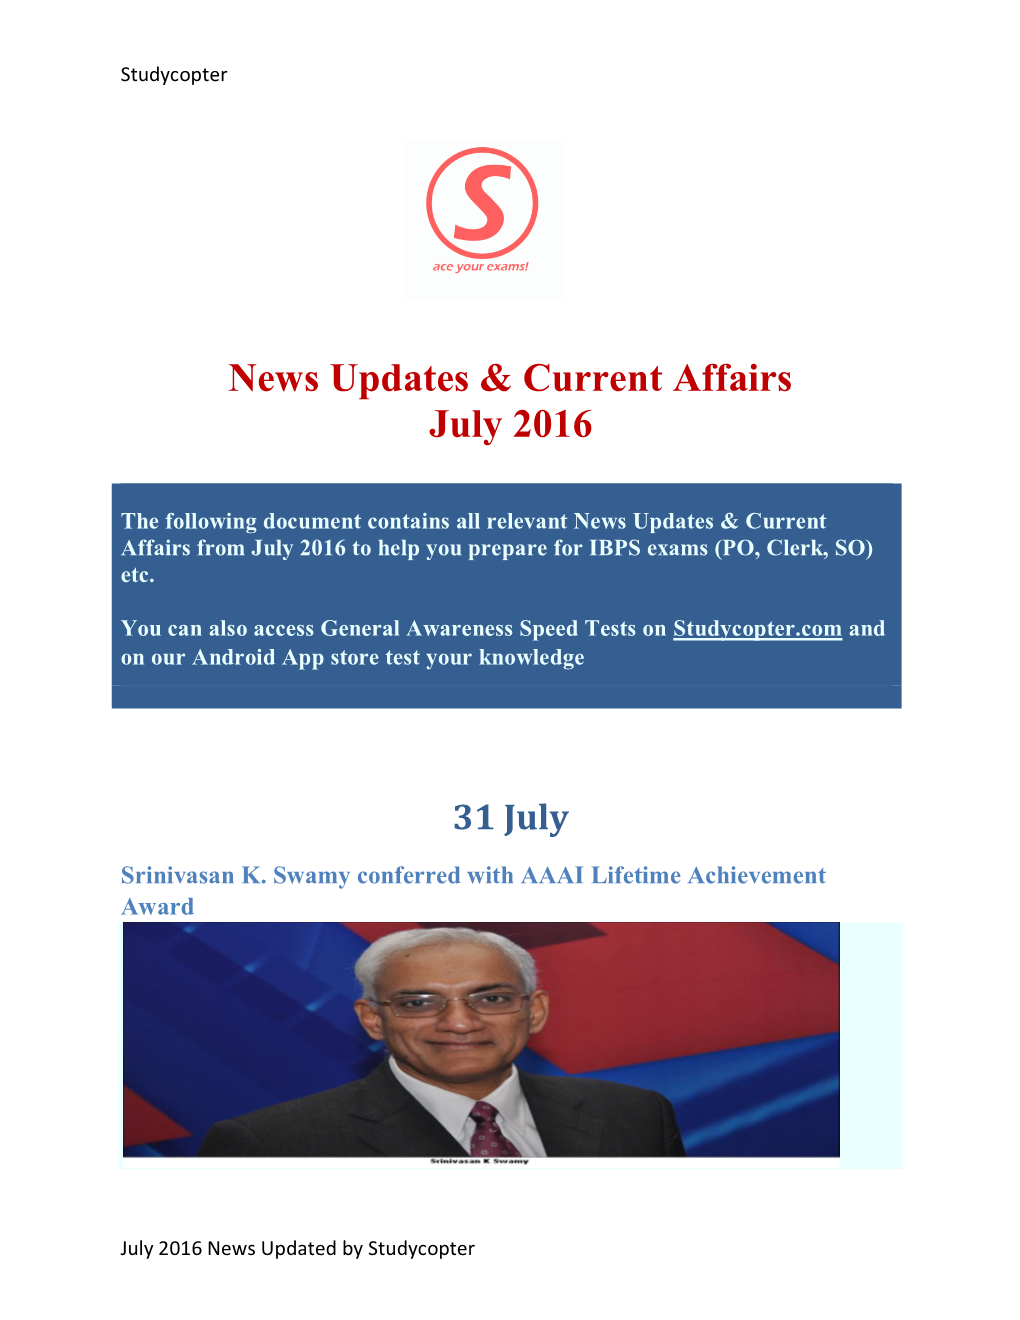 News Updates & Current Affairs July 2016